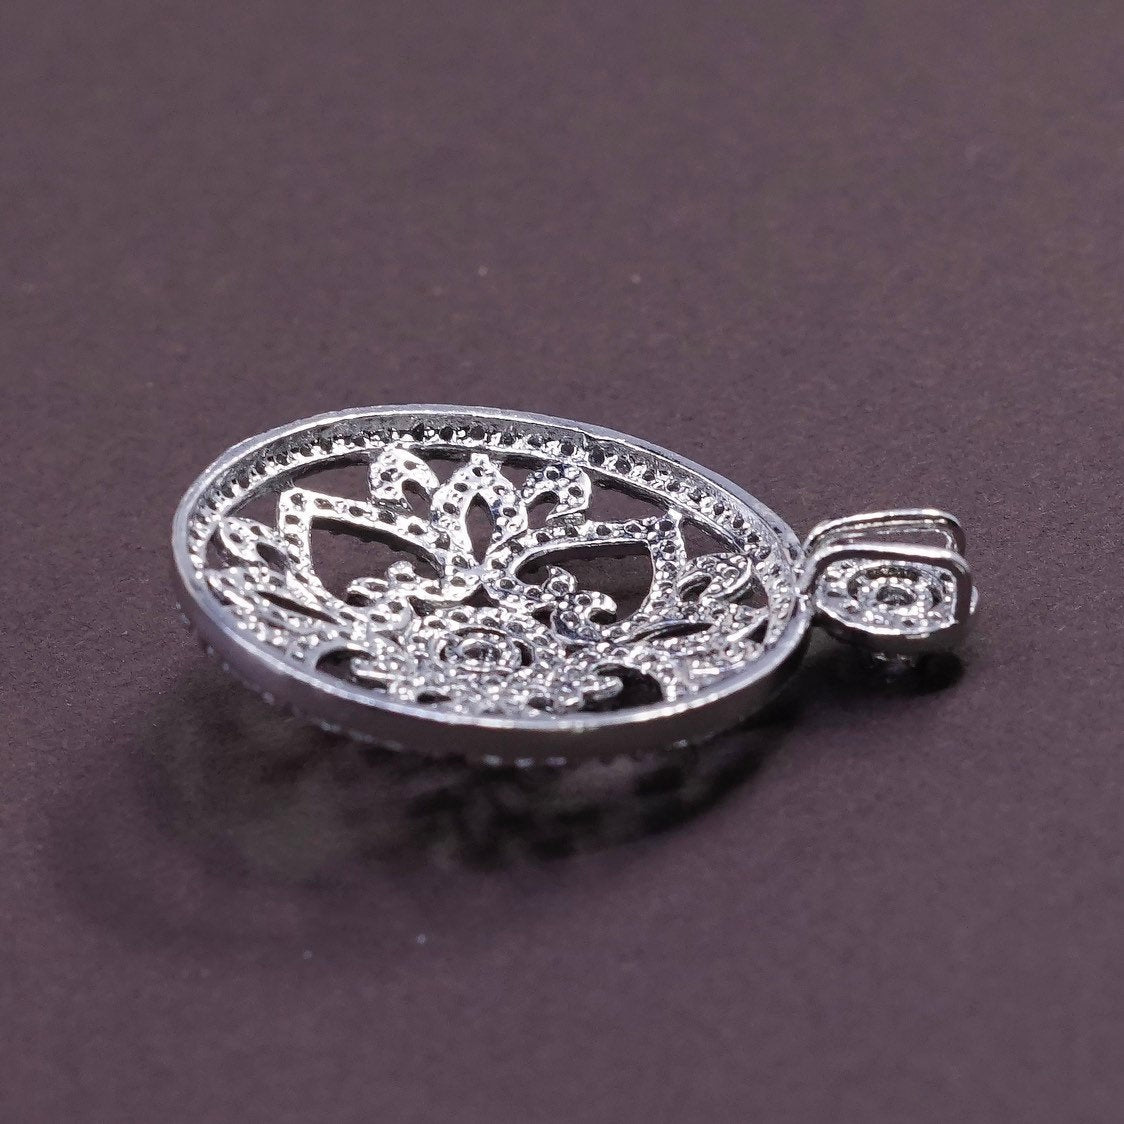 VTG Sterling silver pendant, 925 round pendant w/ cluster crystal